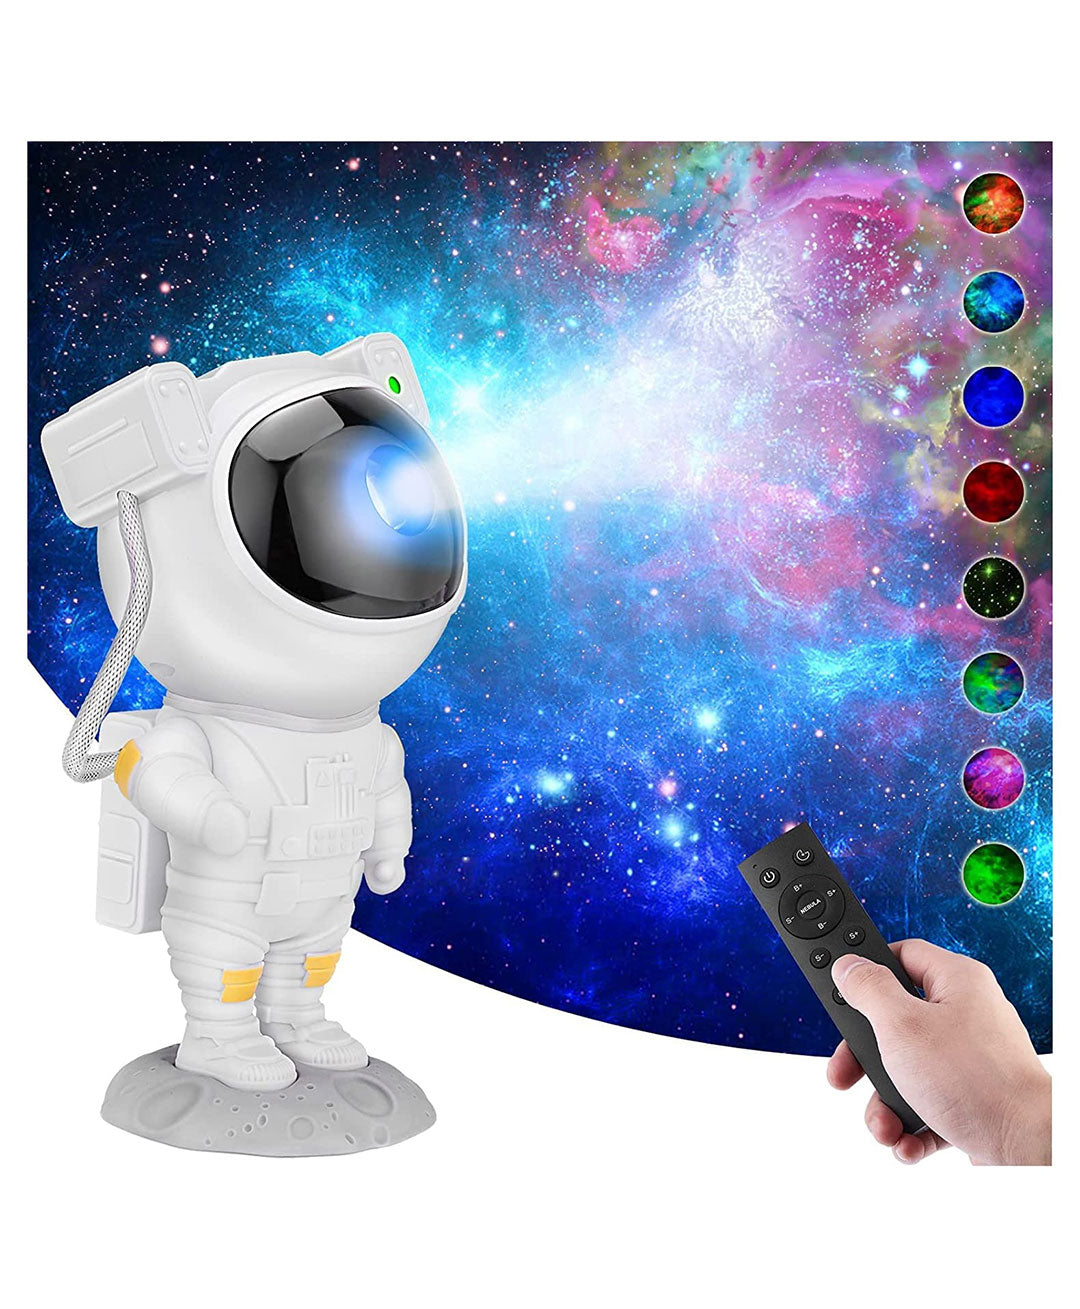 Astronaut Starry Projector